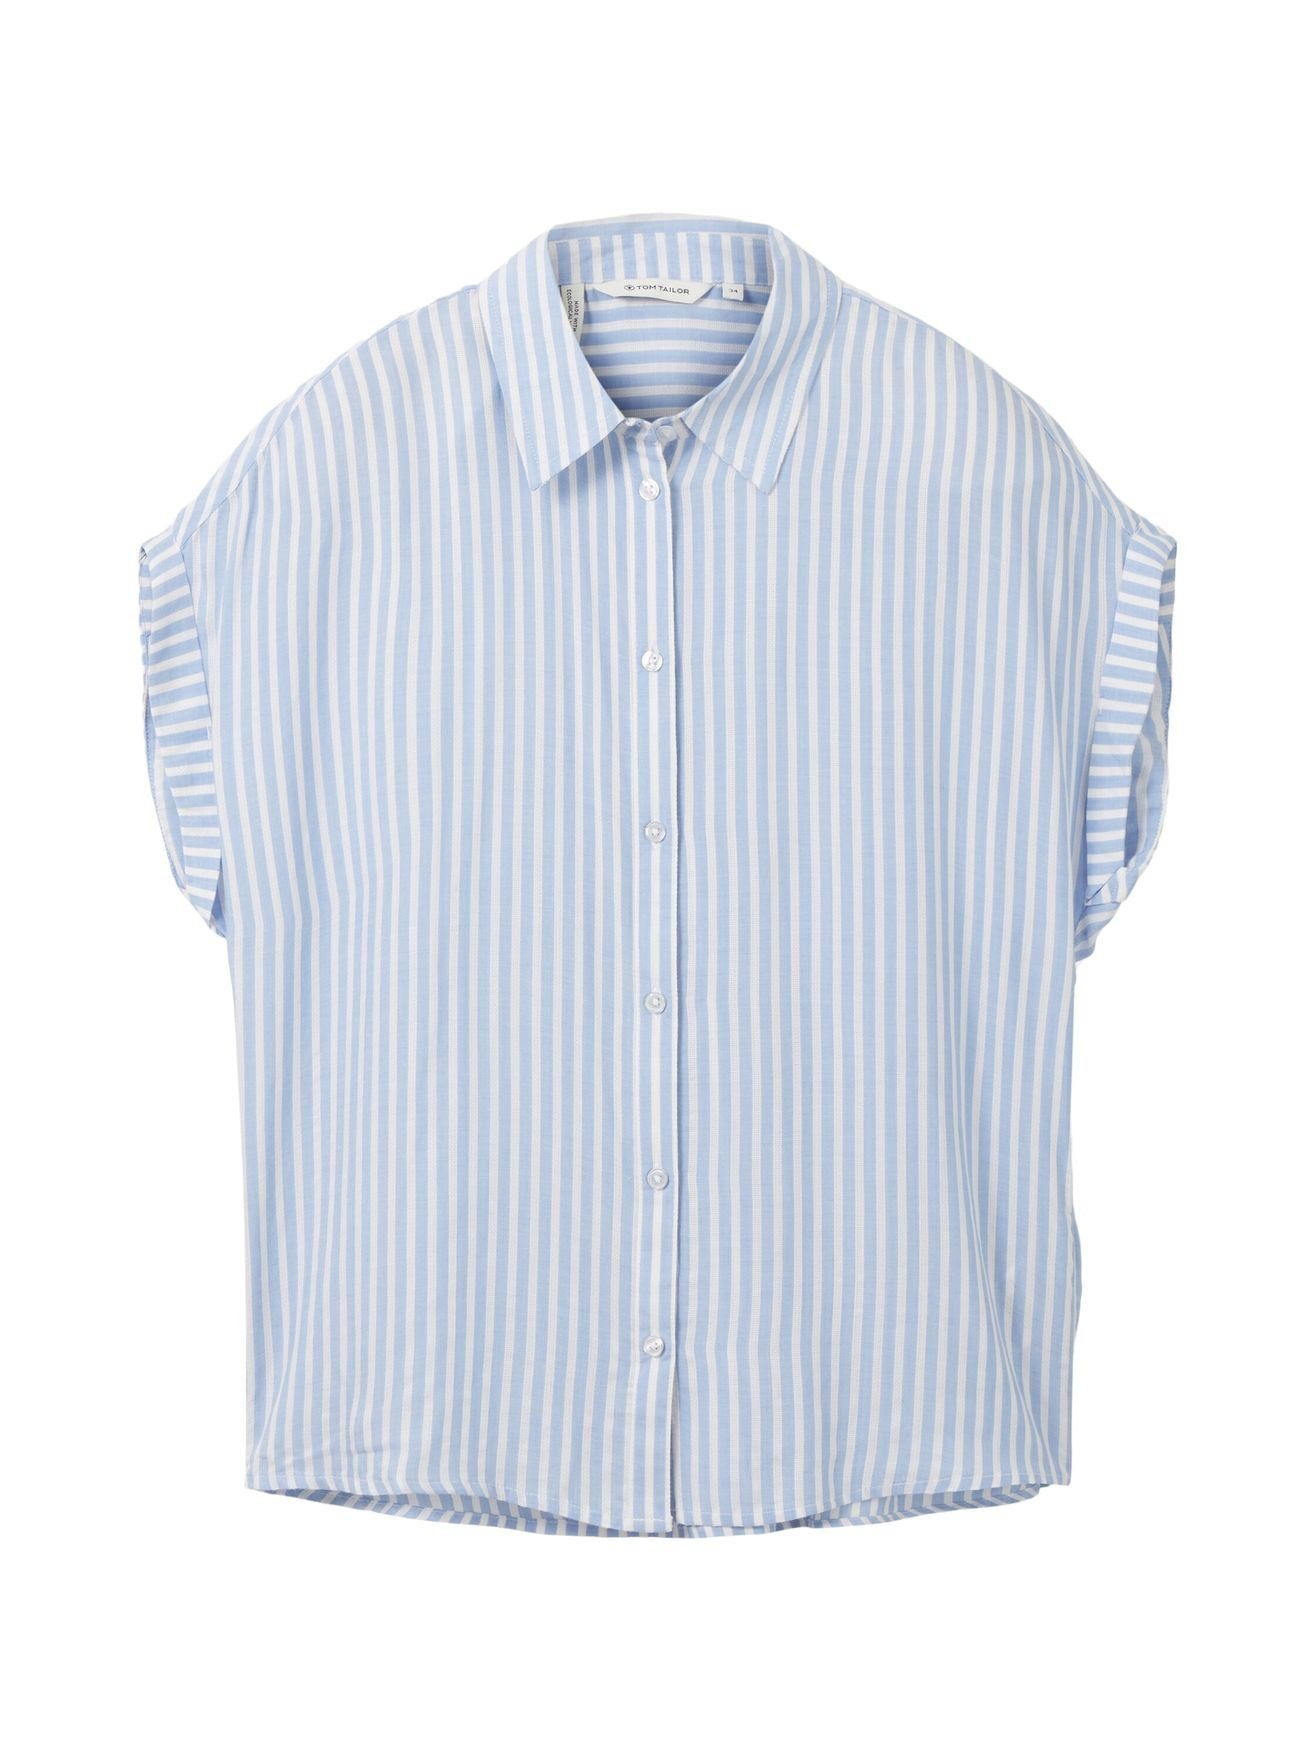 TOM TAILOR Shirt Gestreifte Bluse Blusenshirt in 5364 Kurzarm Blau Übergröße